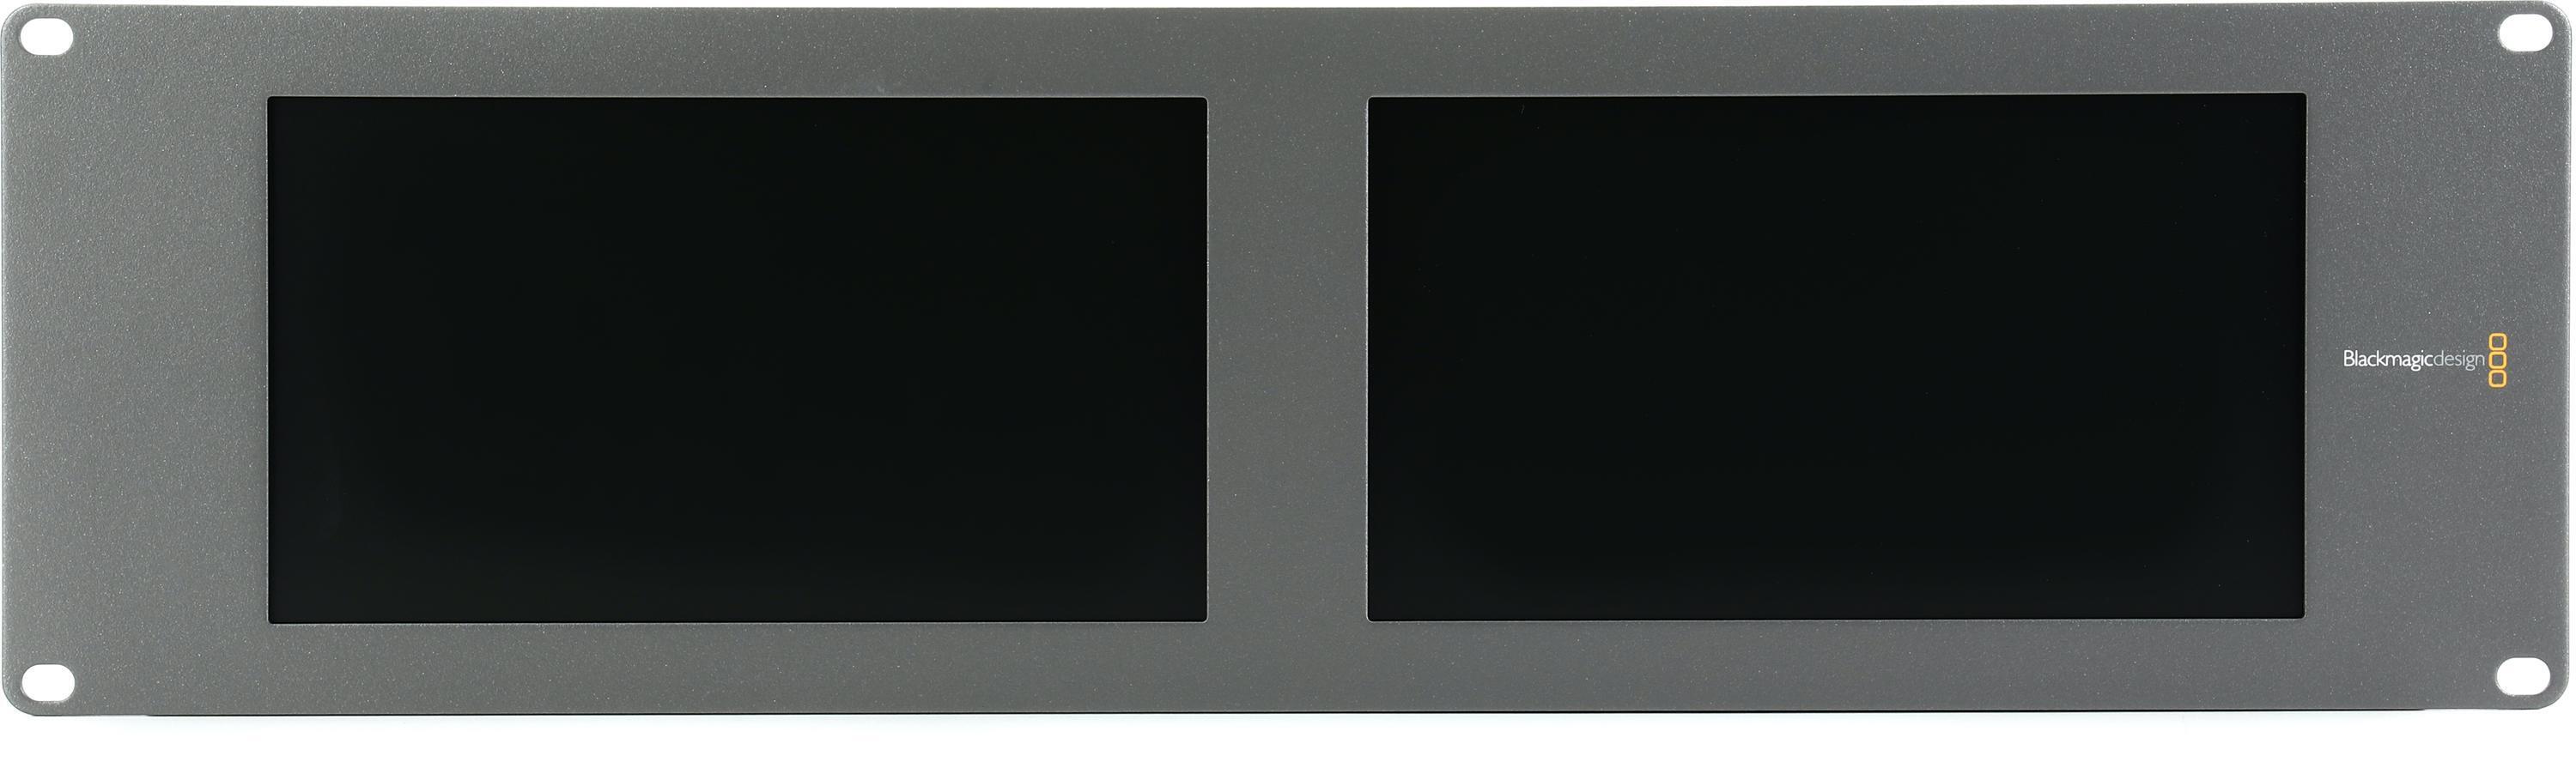 Blackmagic Design SmartView Duo 2 Dual 8-inch Intelligent 6G-SDI Rack  Monitors